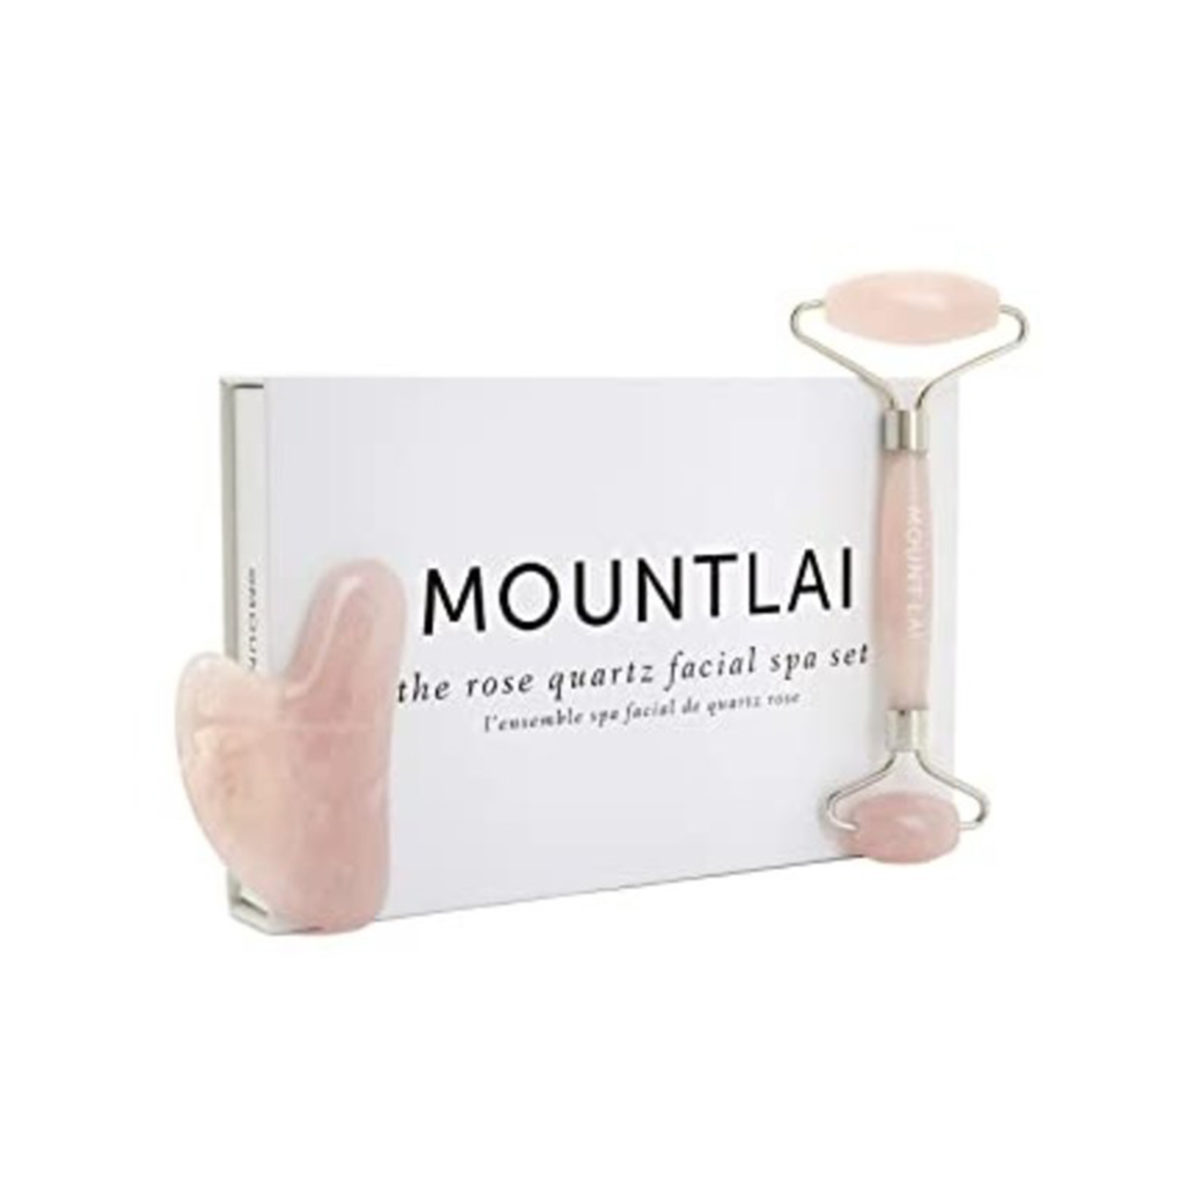 Mount Lai - The Rose Quartz Facial Spa Set Mount Lai - مجموعة سبا الوجه روز كوارتز